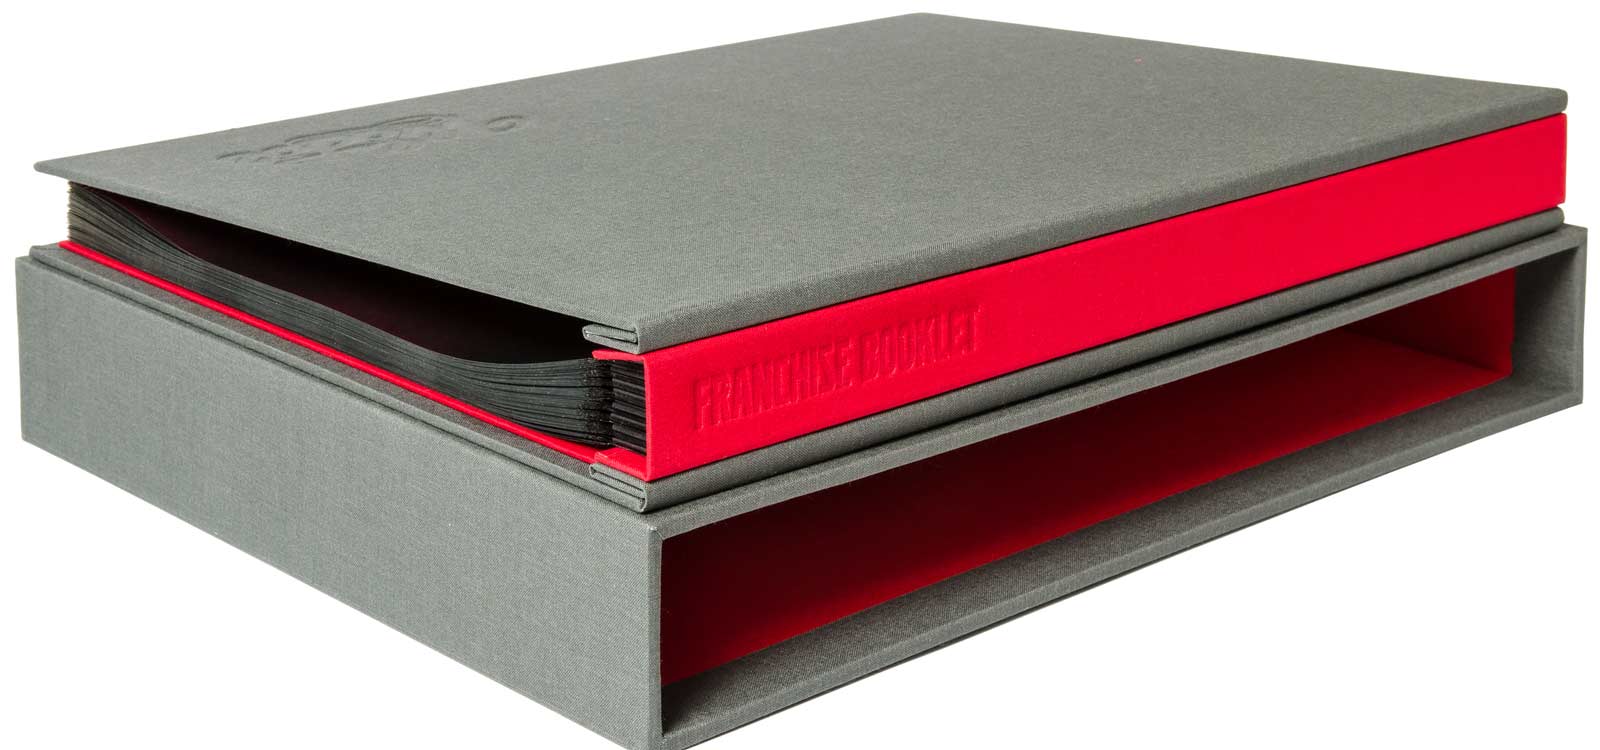 custom presentation portfolio binder with slip-case